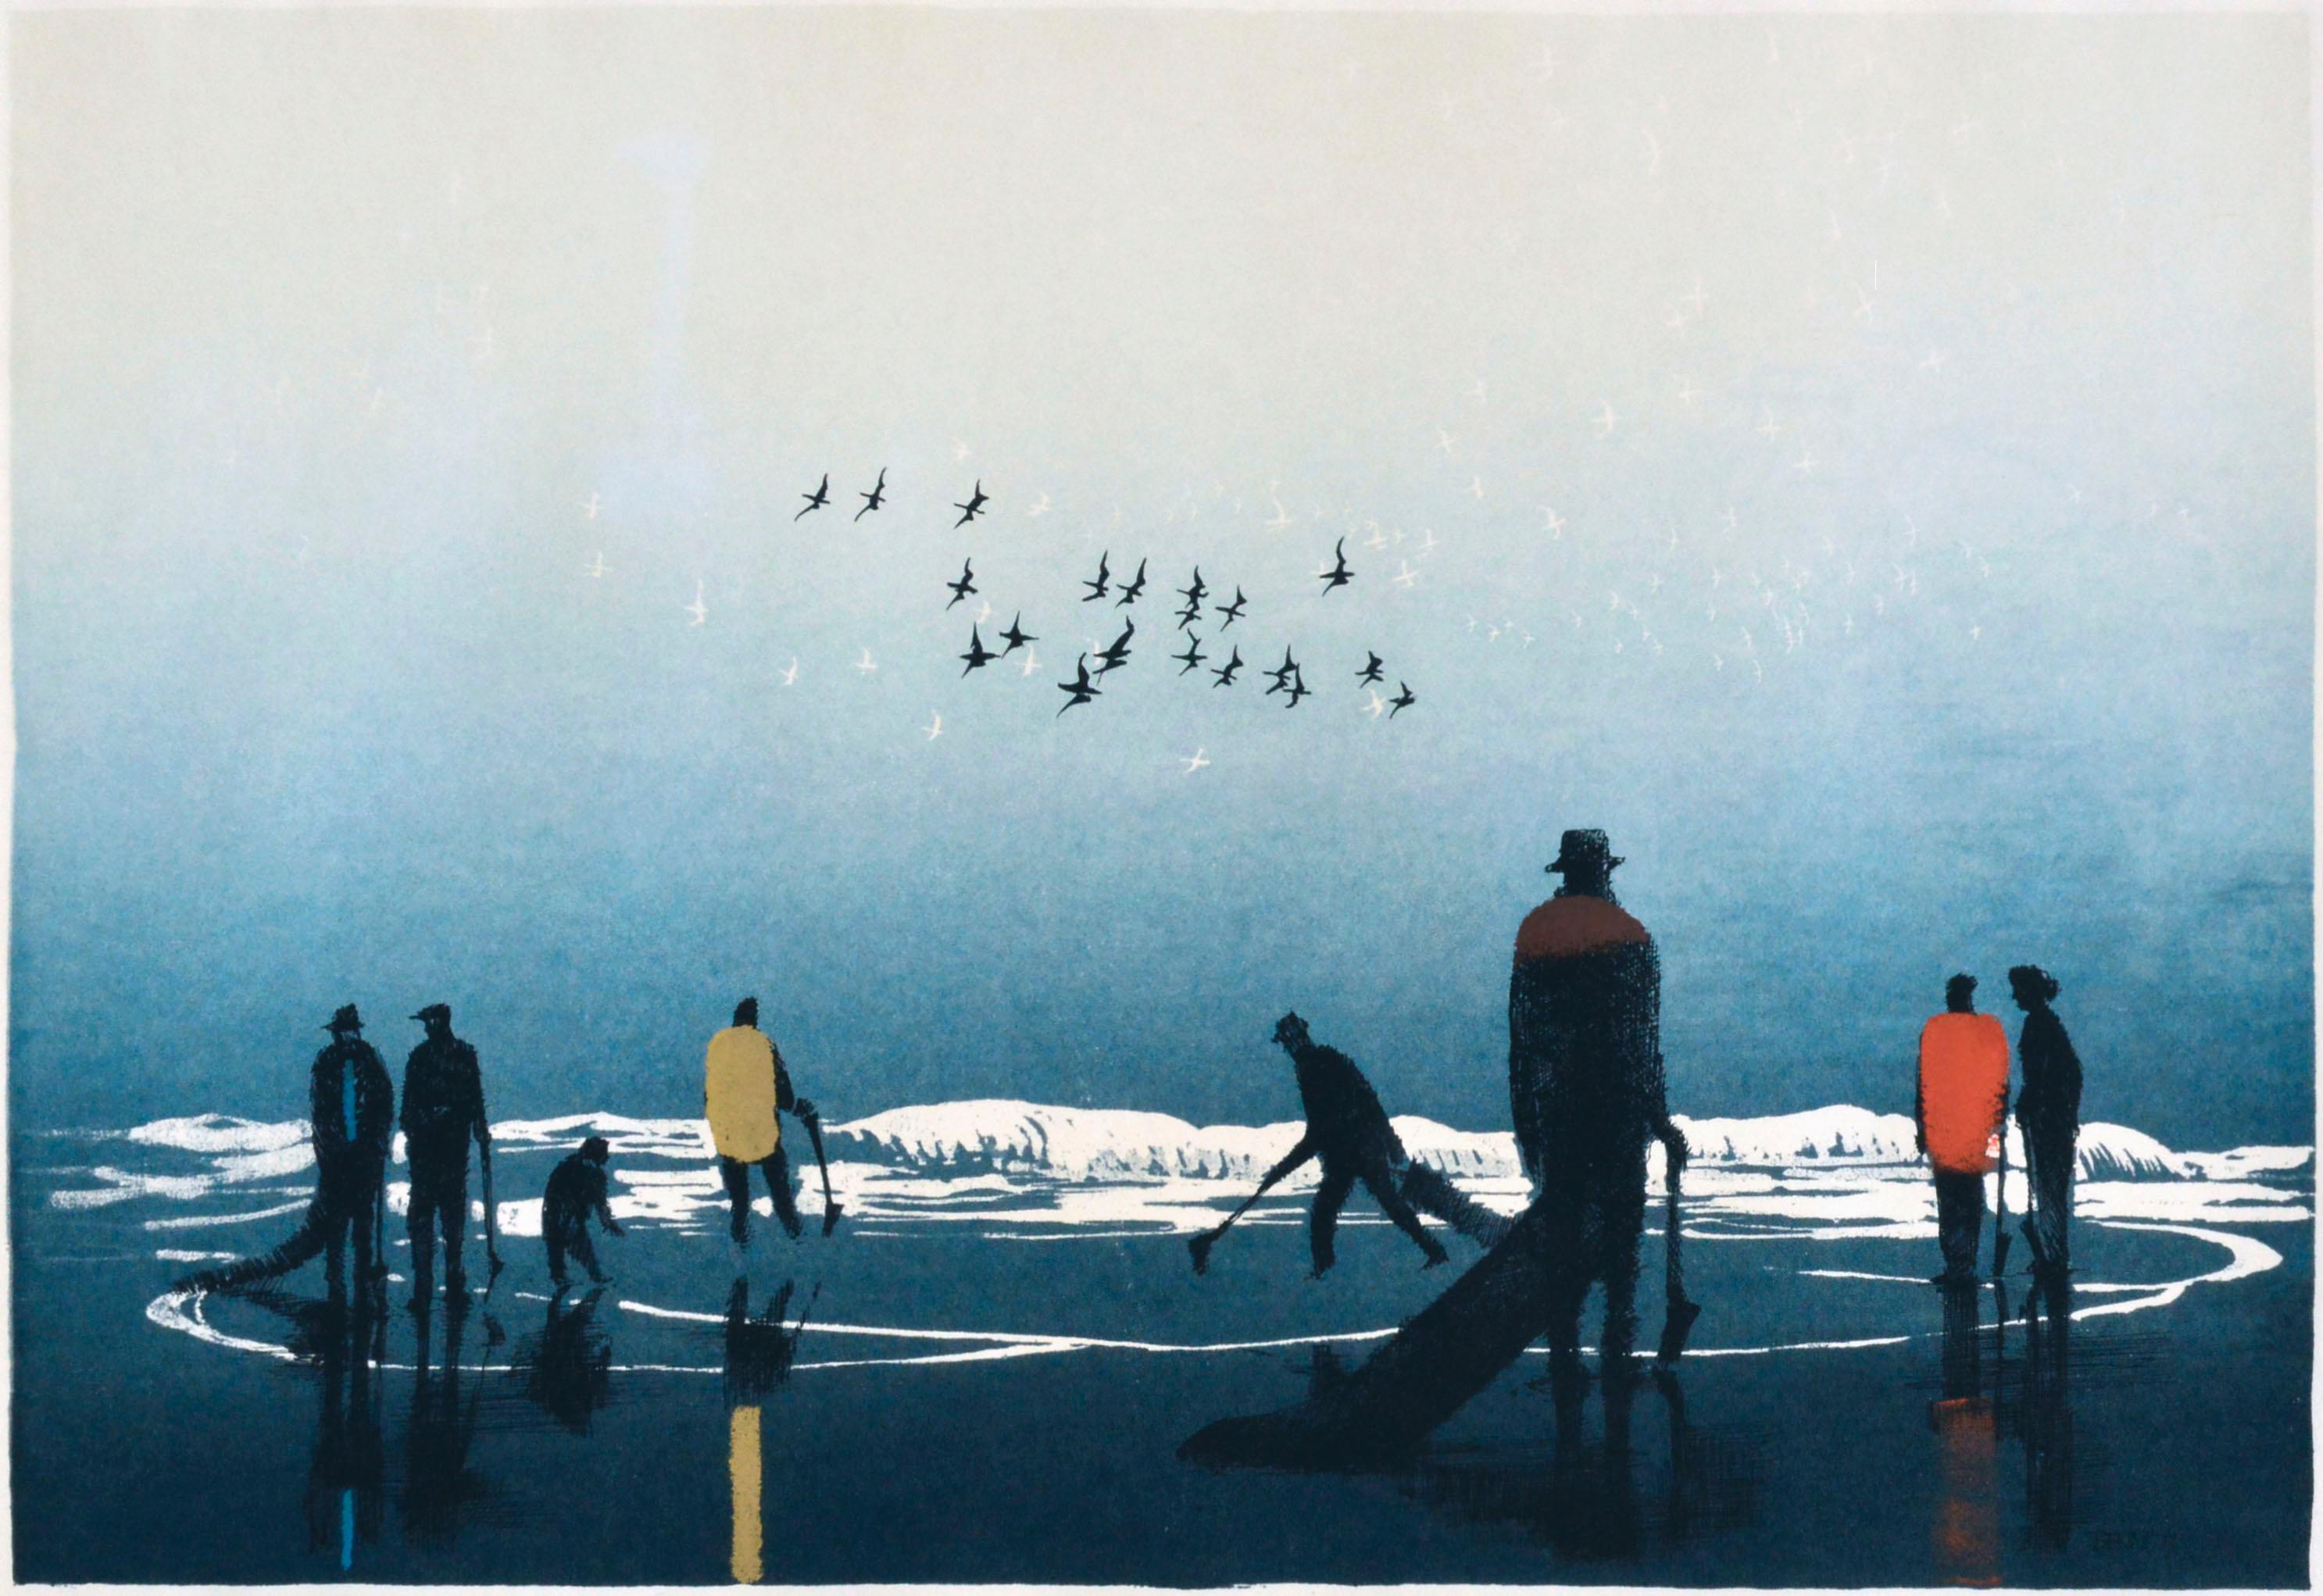 The Seabirds' Cry - Print by Elton Bennett